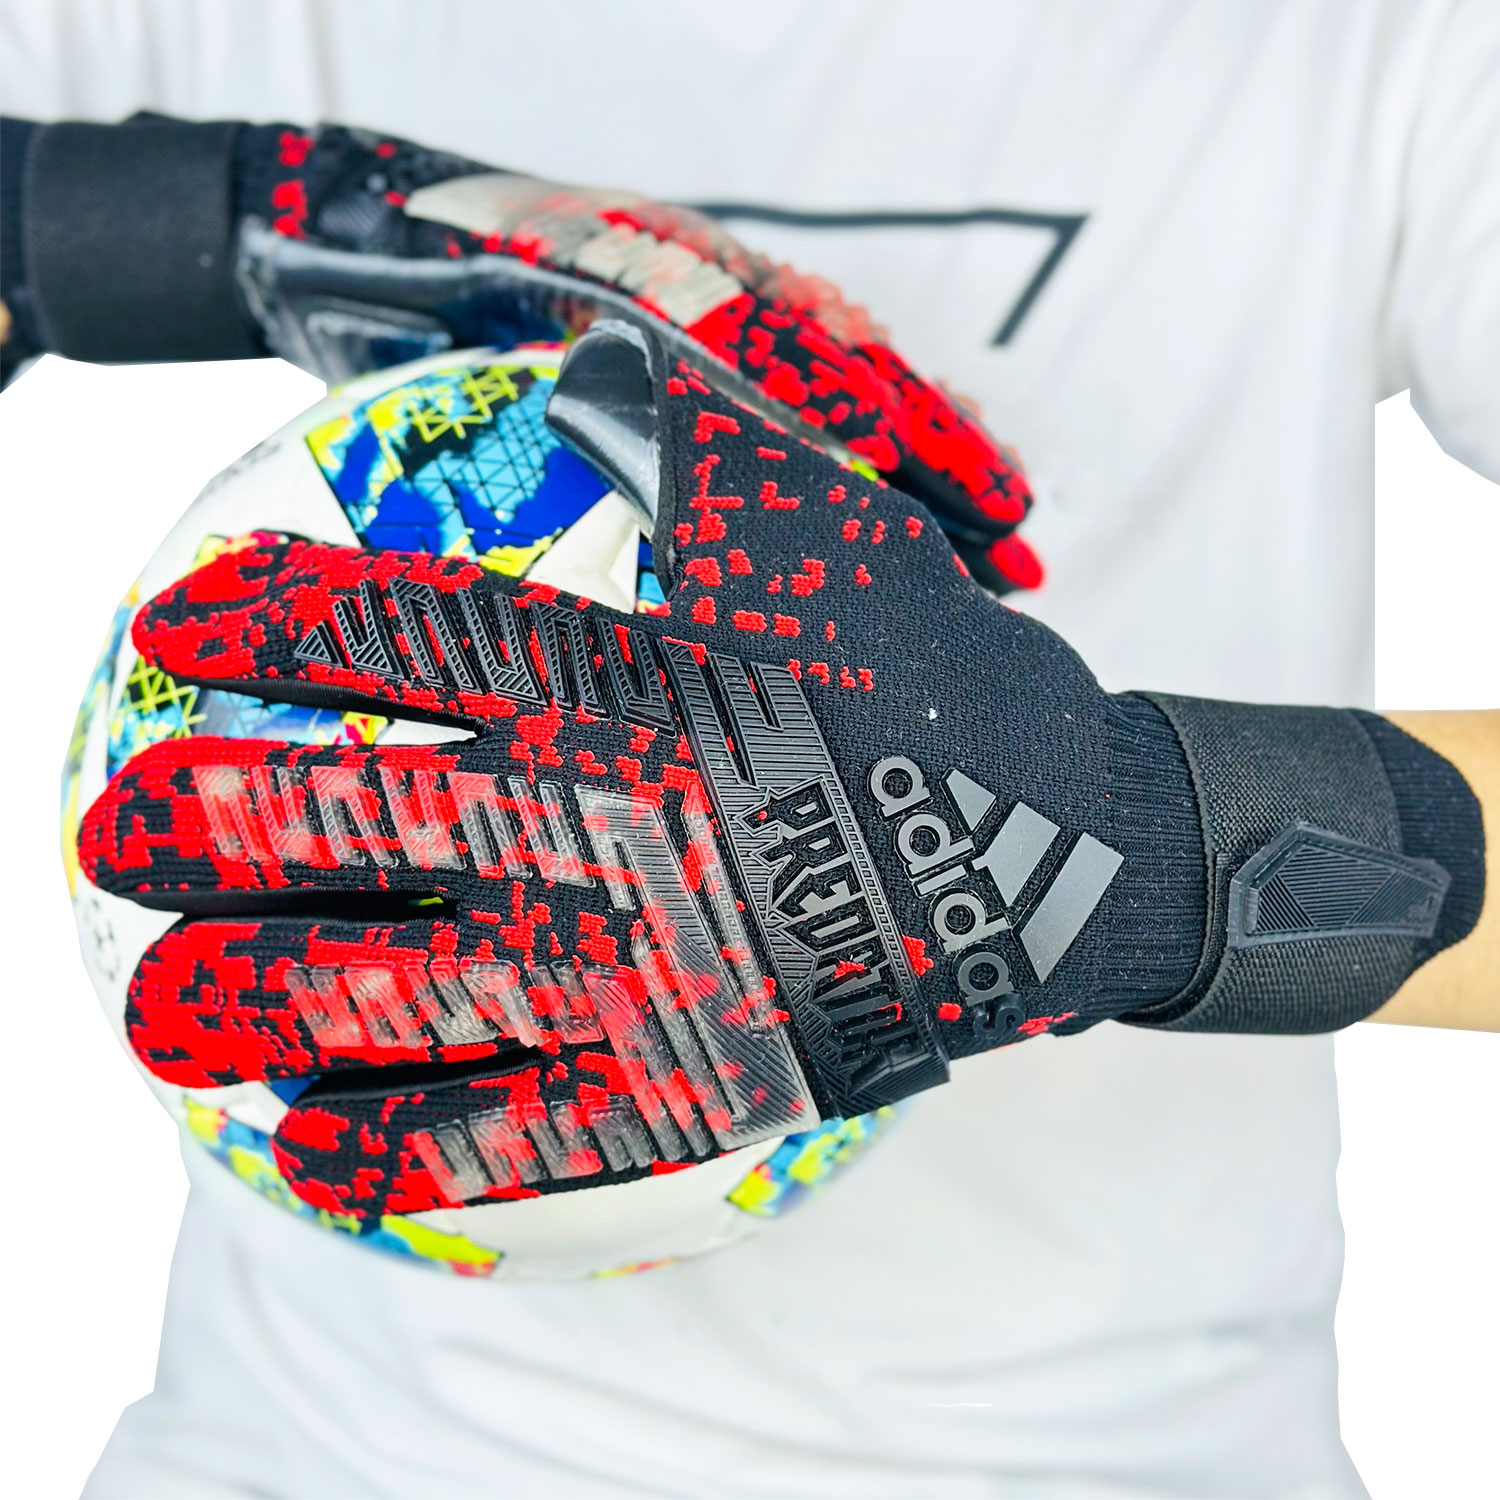 Вратарские перчатки Adidas Predator